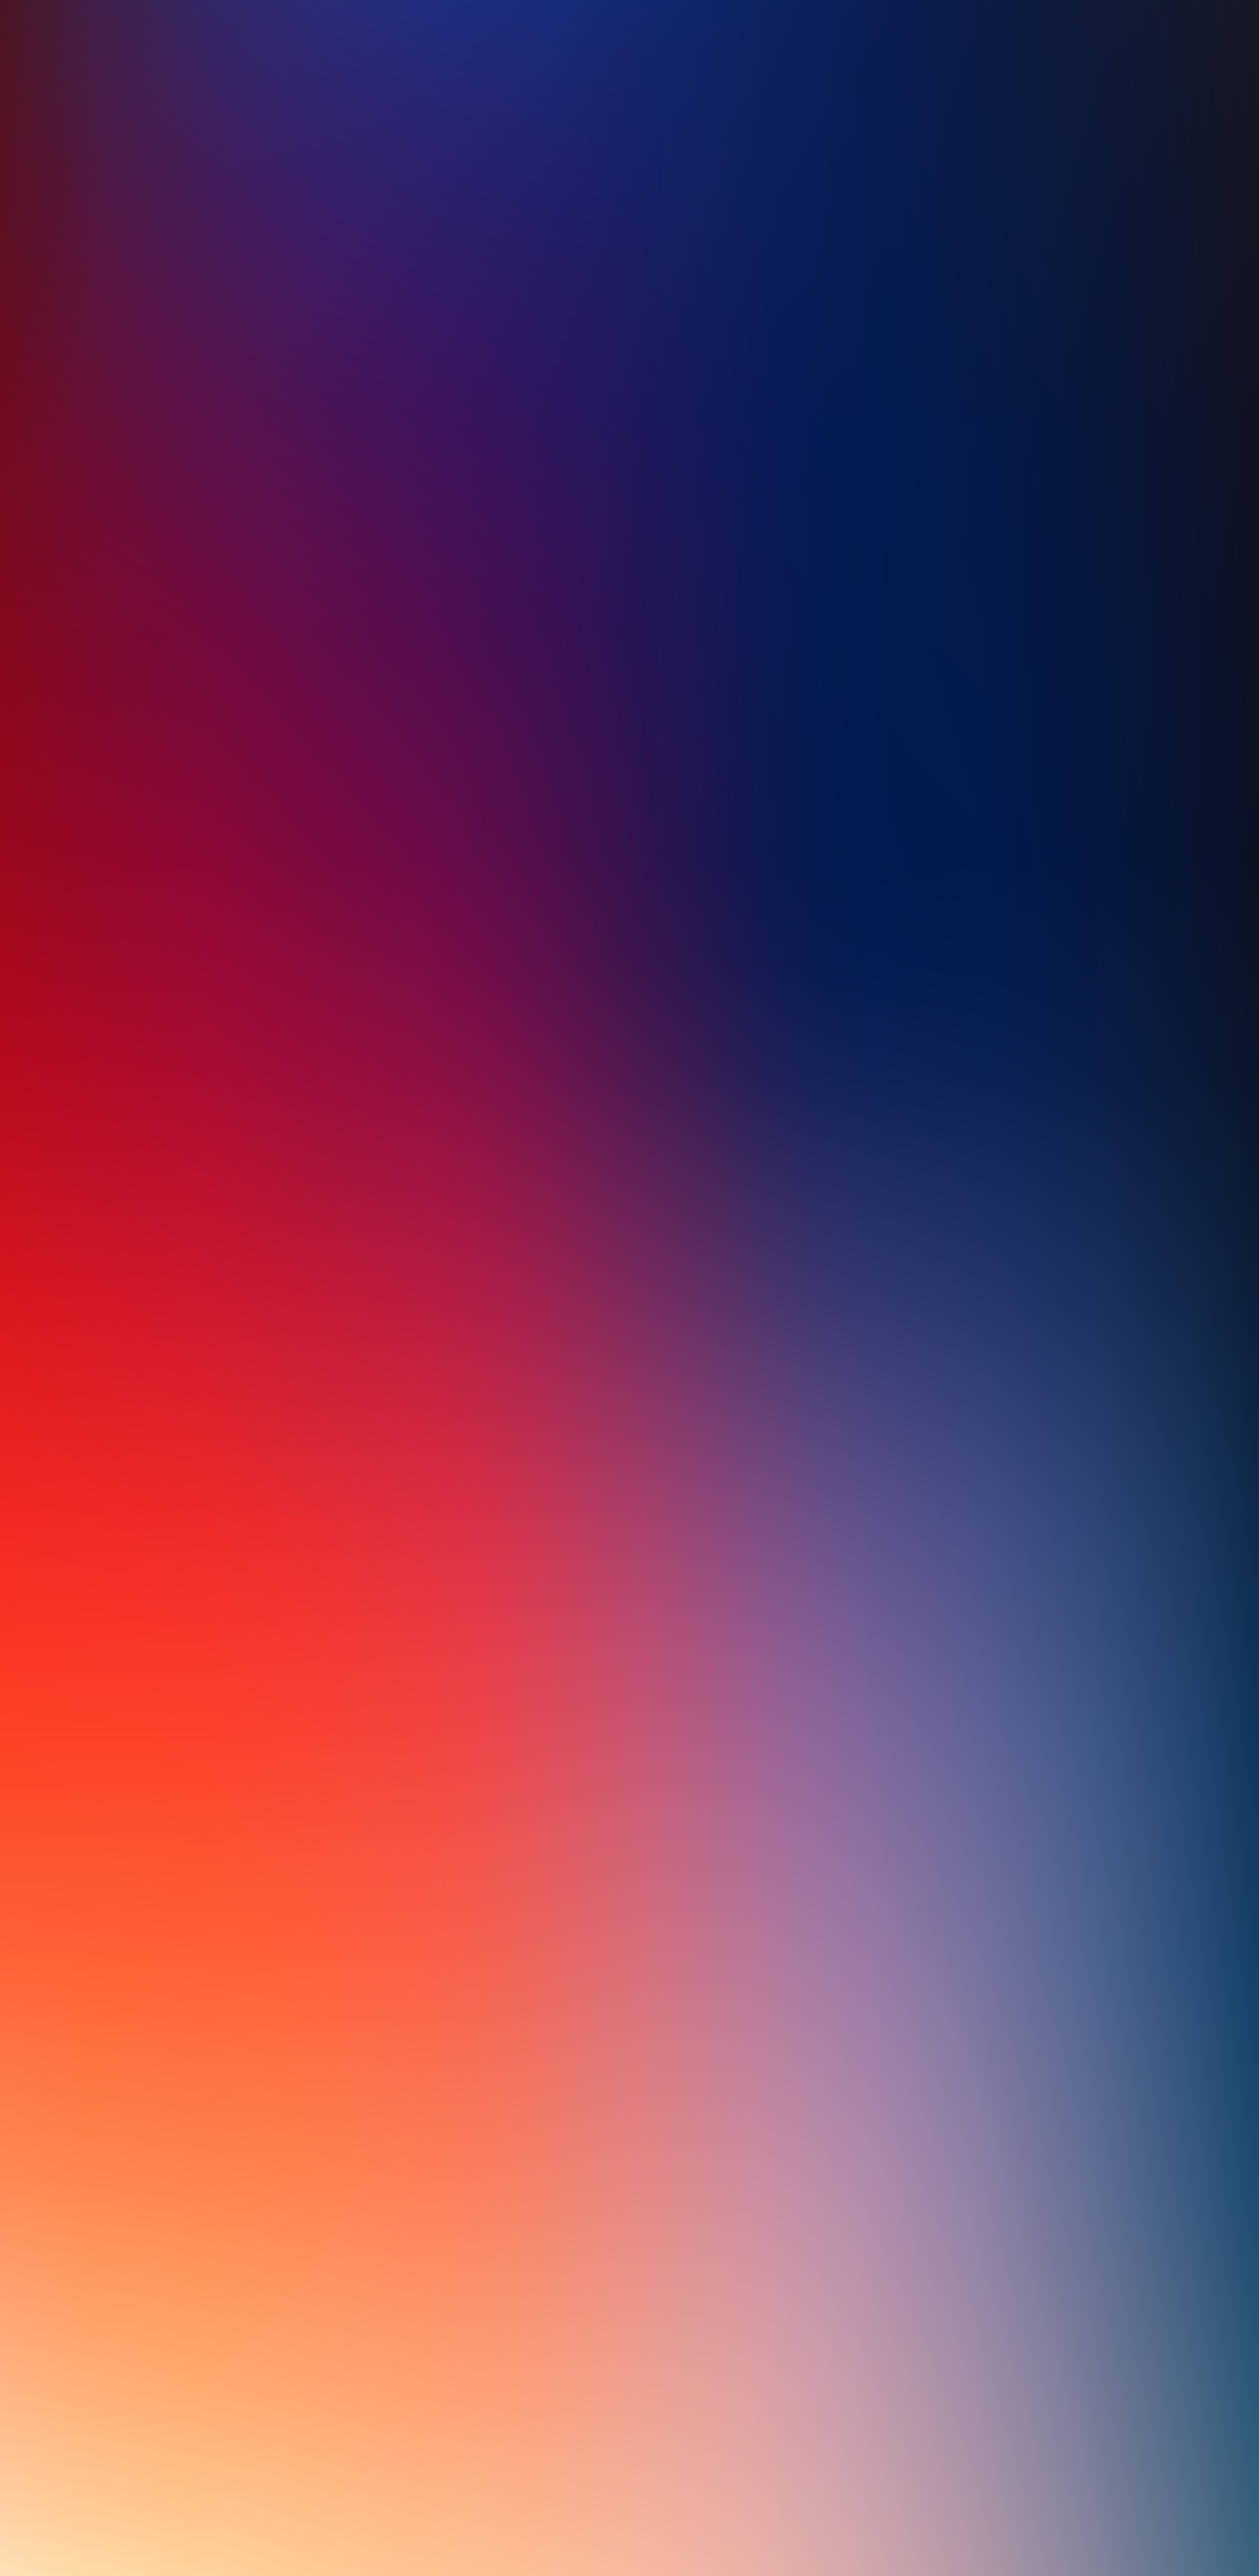 Gradient Colors iPhone Wallpaper - iPhone Wallpapers